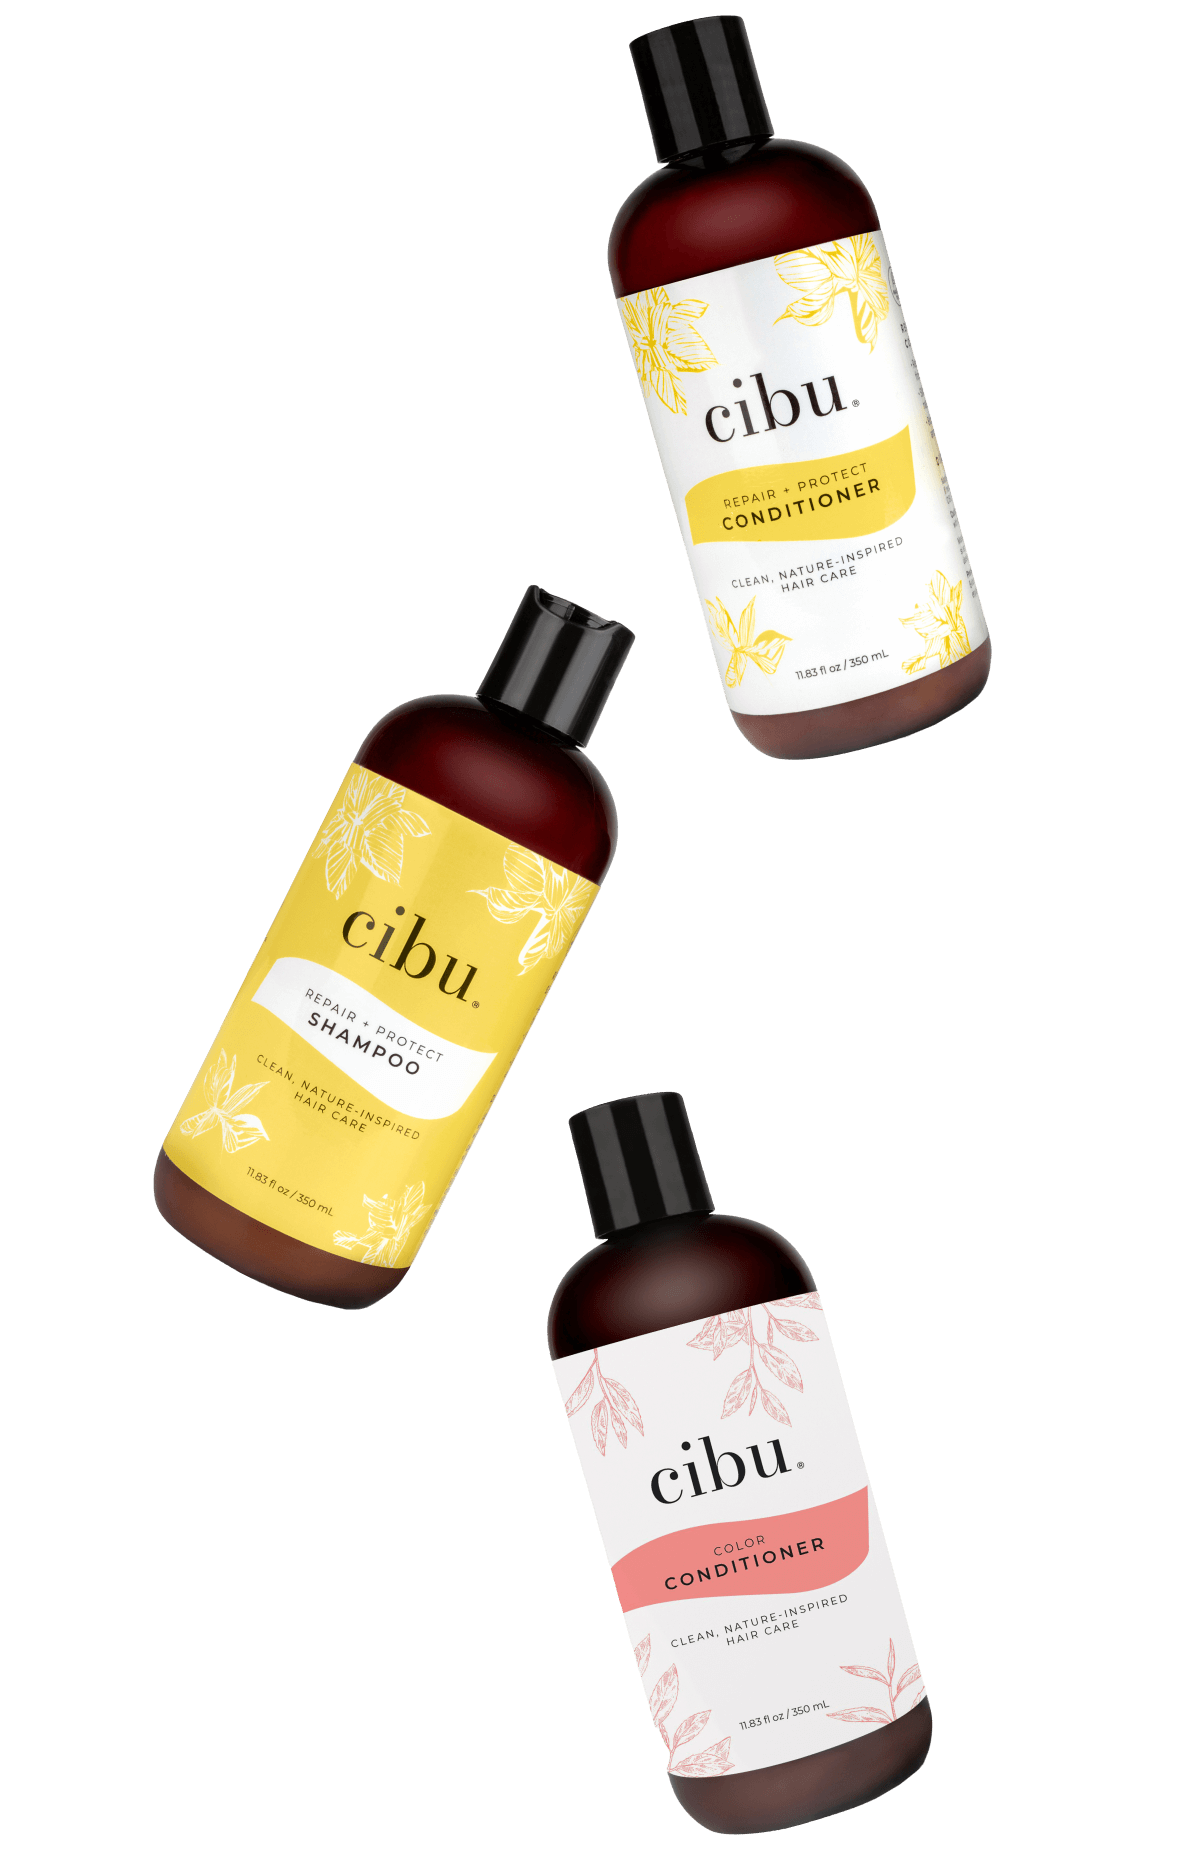 Cibu shampoo and conditioner